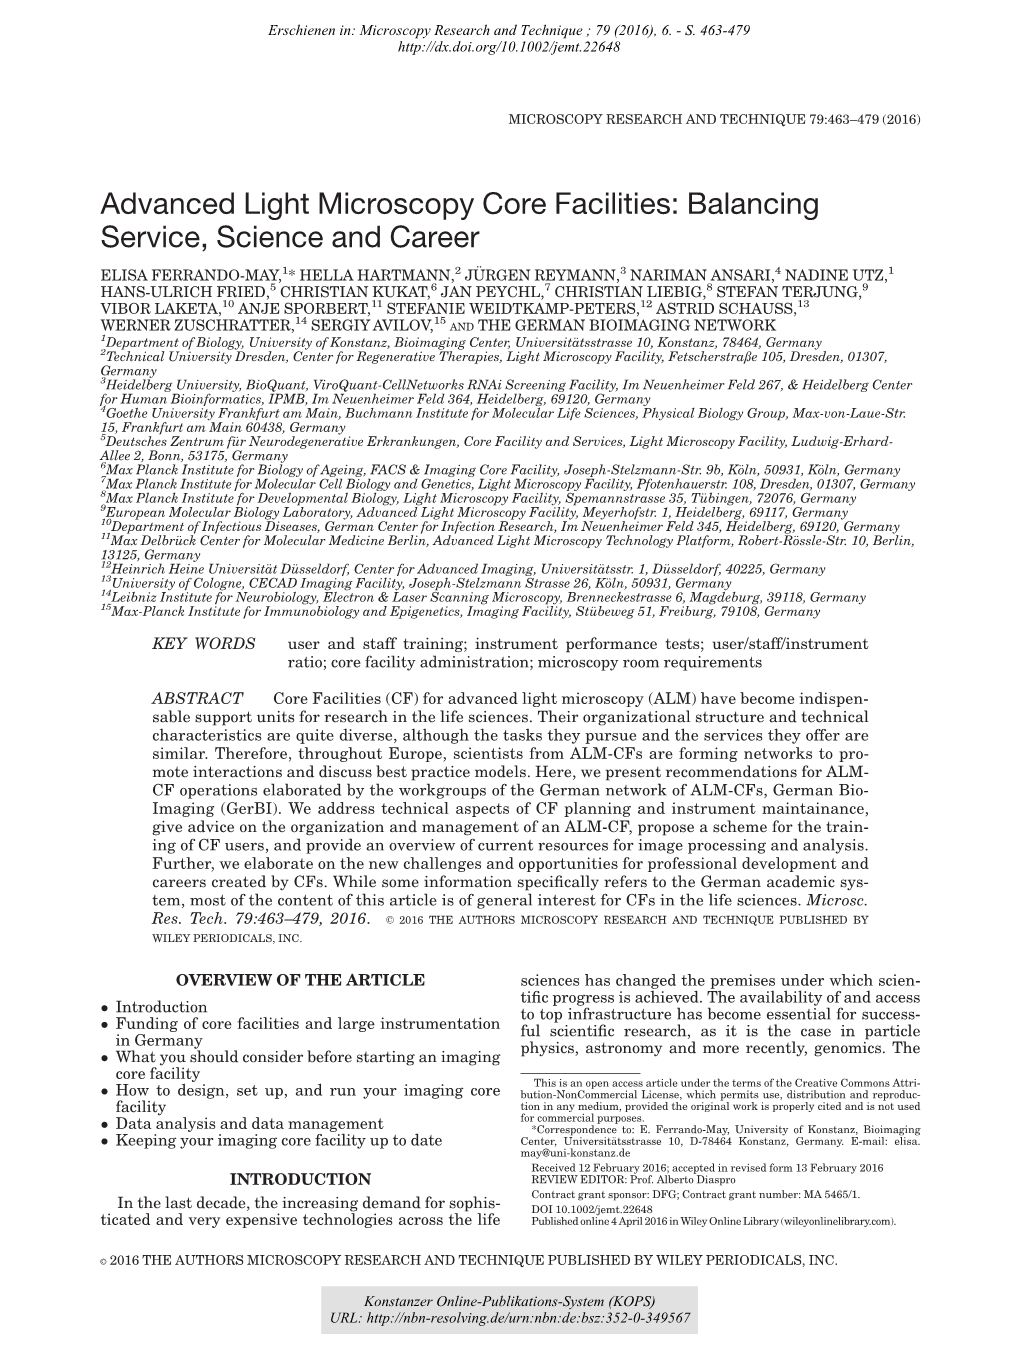 Advanced Light Microscopy Core Facilities: Balancing Service, Science and Career